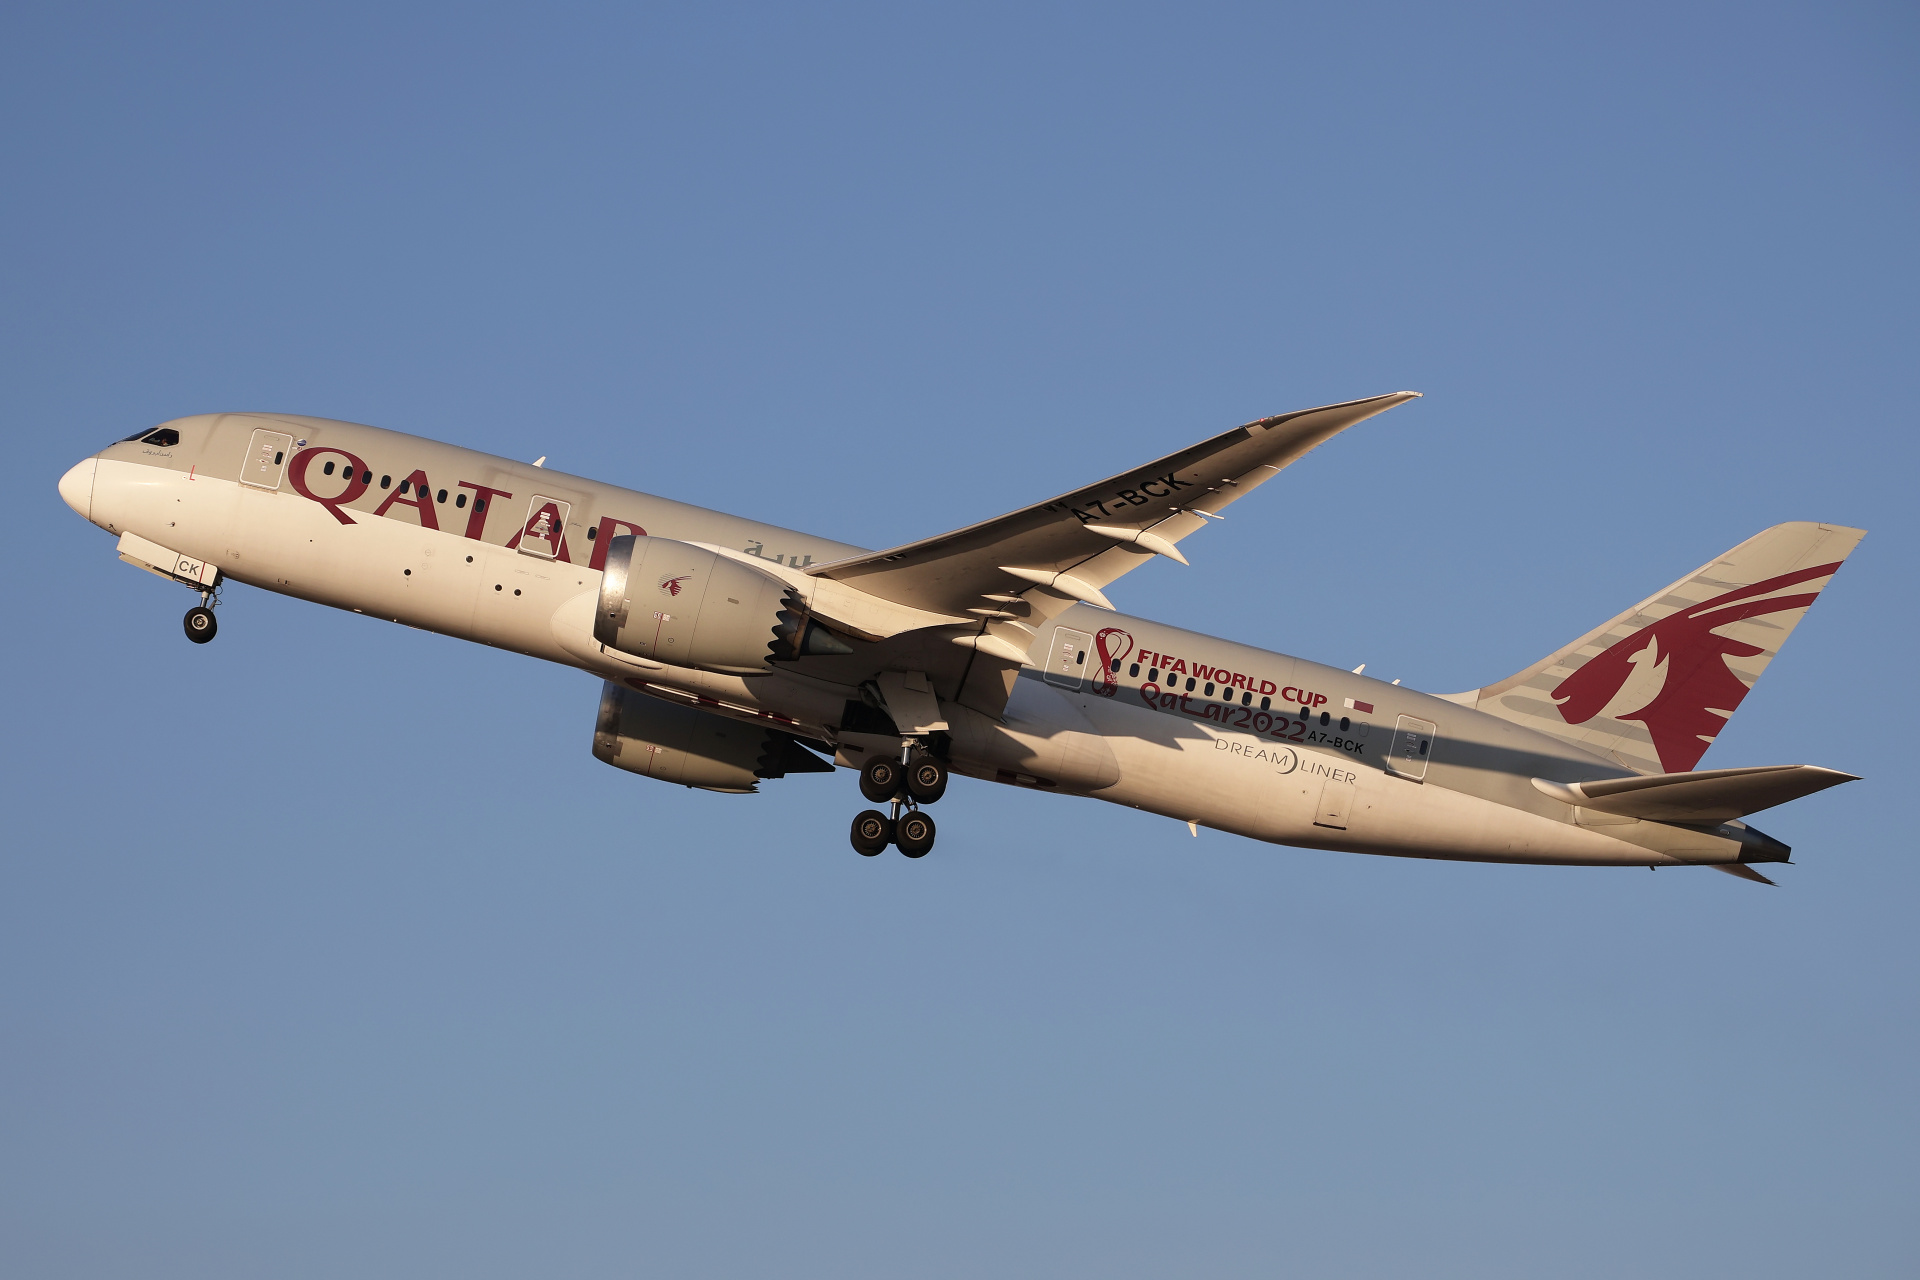 A7-BCK (FIFA World Cup Qatar 2022 livery) (Aircraft » EPWA Spotting » Boeing 787-8 Dreamliner » Qatar Airways)